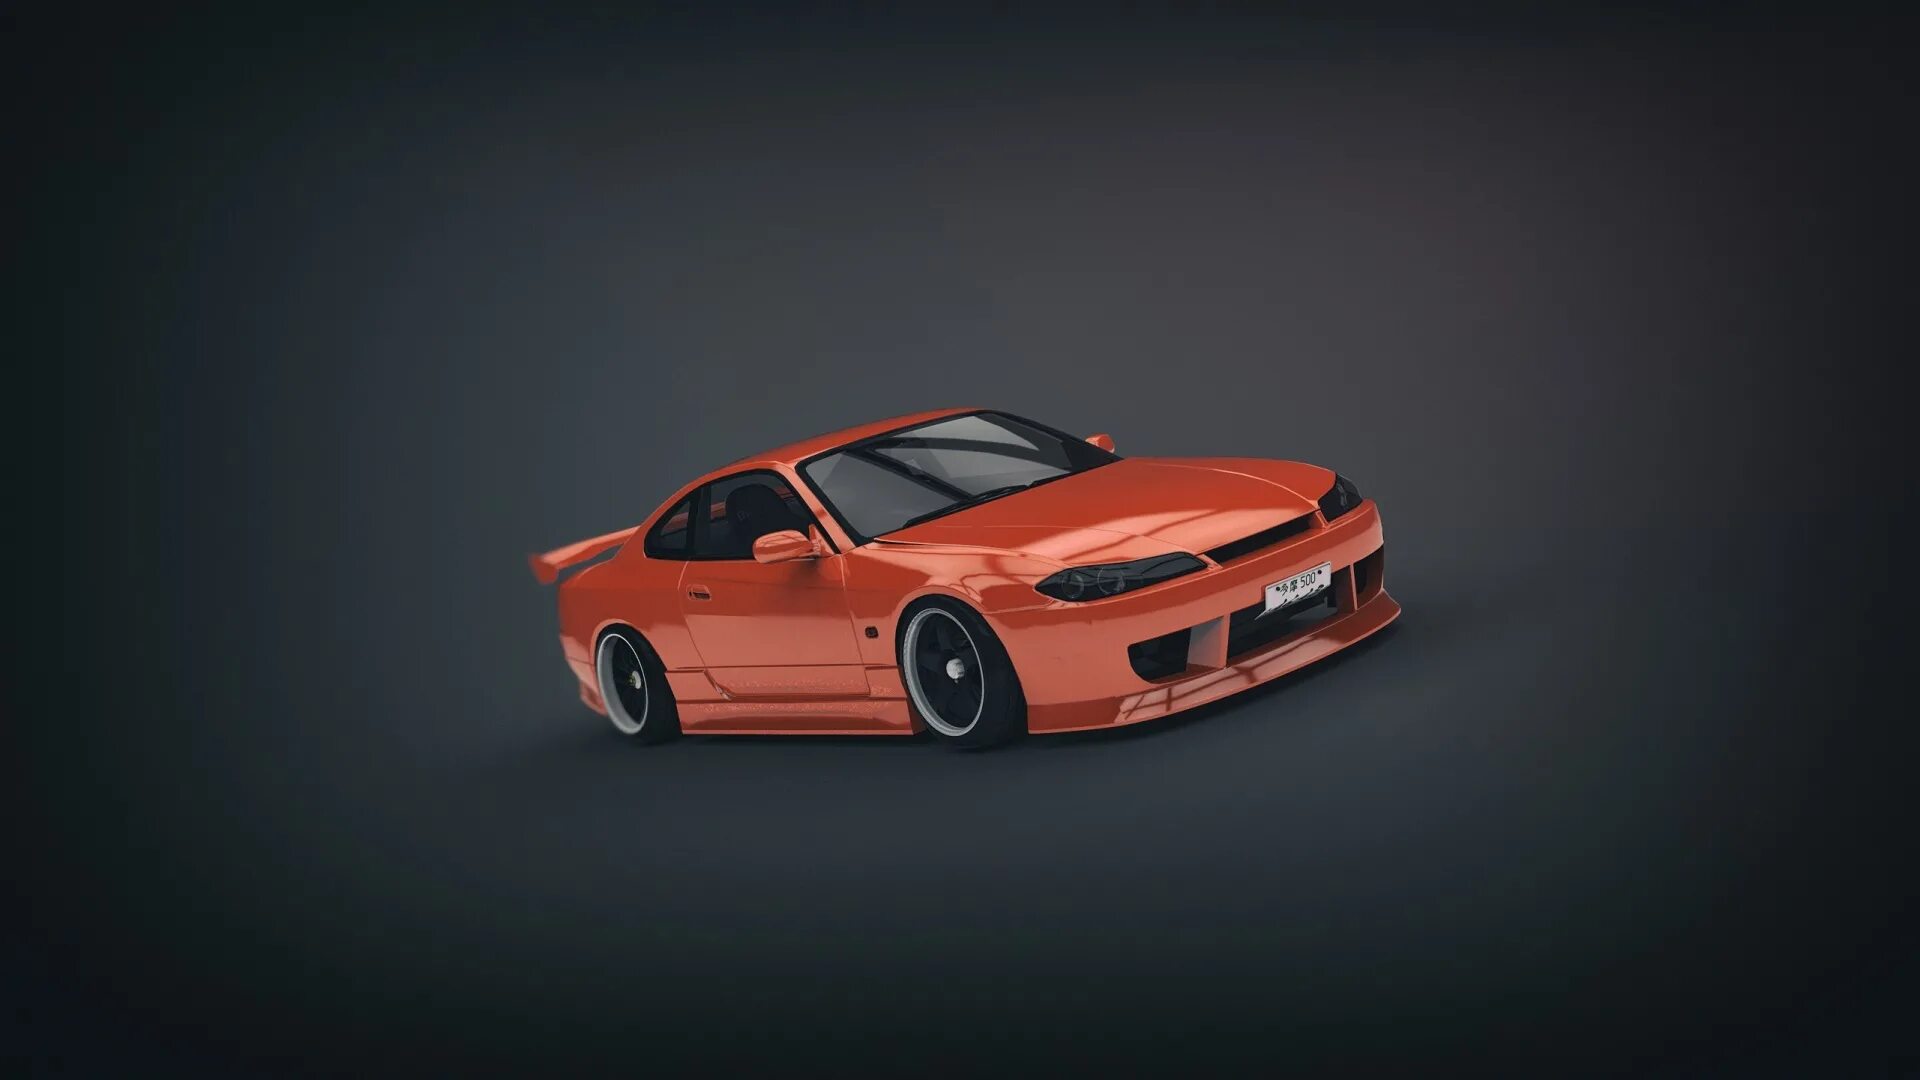 14 s 15 s 17. Nissan Silvia s15 Orange. Nissan Silvia s10. Nissan Silvia s15 оранжевая. Nissan Silvia k`s (s13).